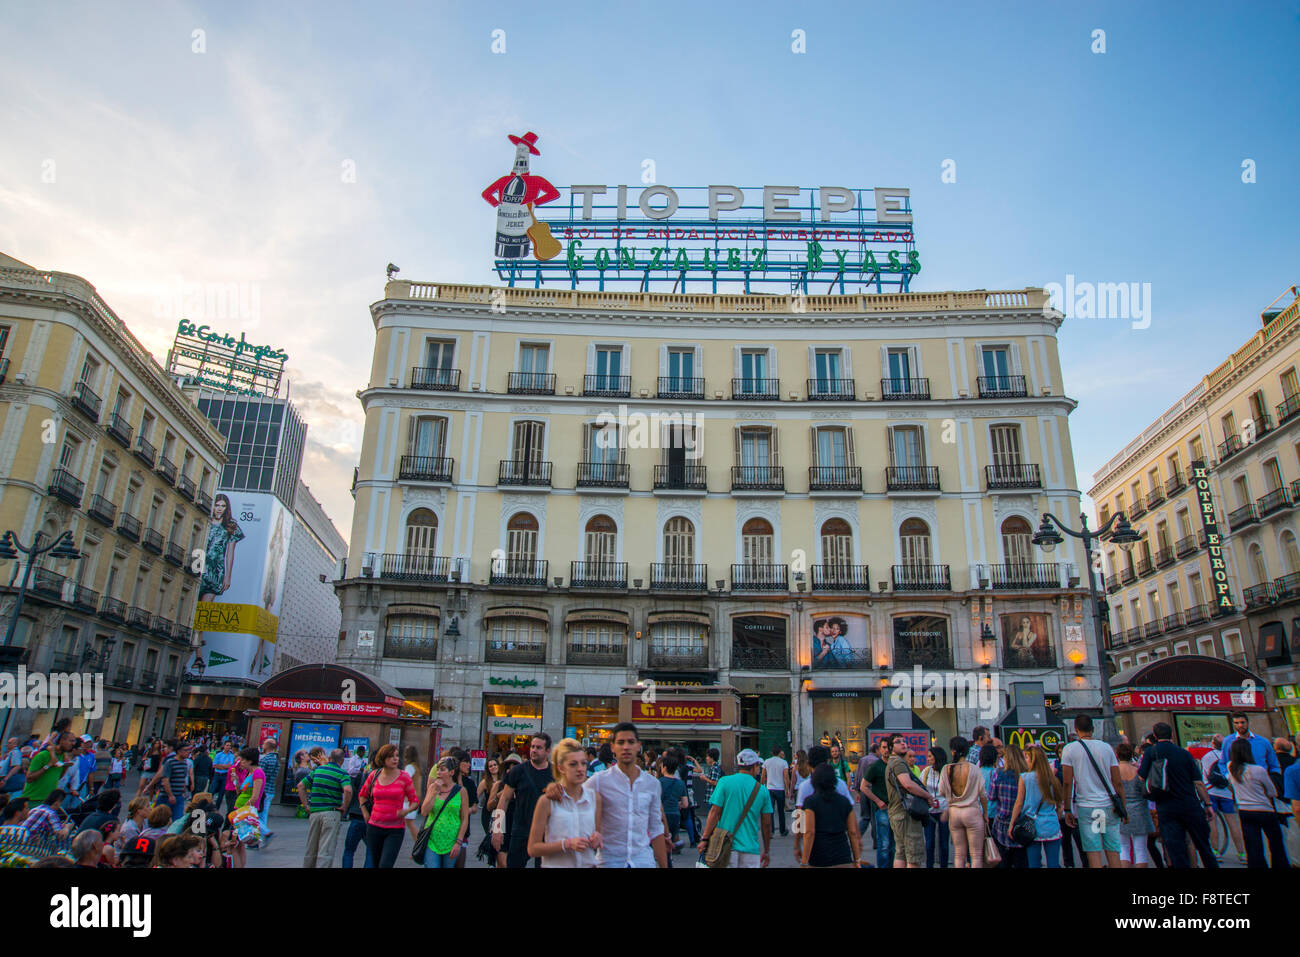 Tio Pepe Leuchtreklame auf die neue Position. Puerta del Sol, Madrid, Spanien. Stockfoto